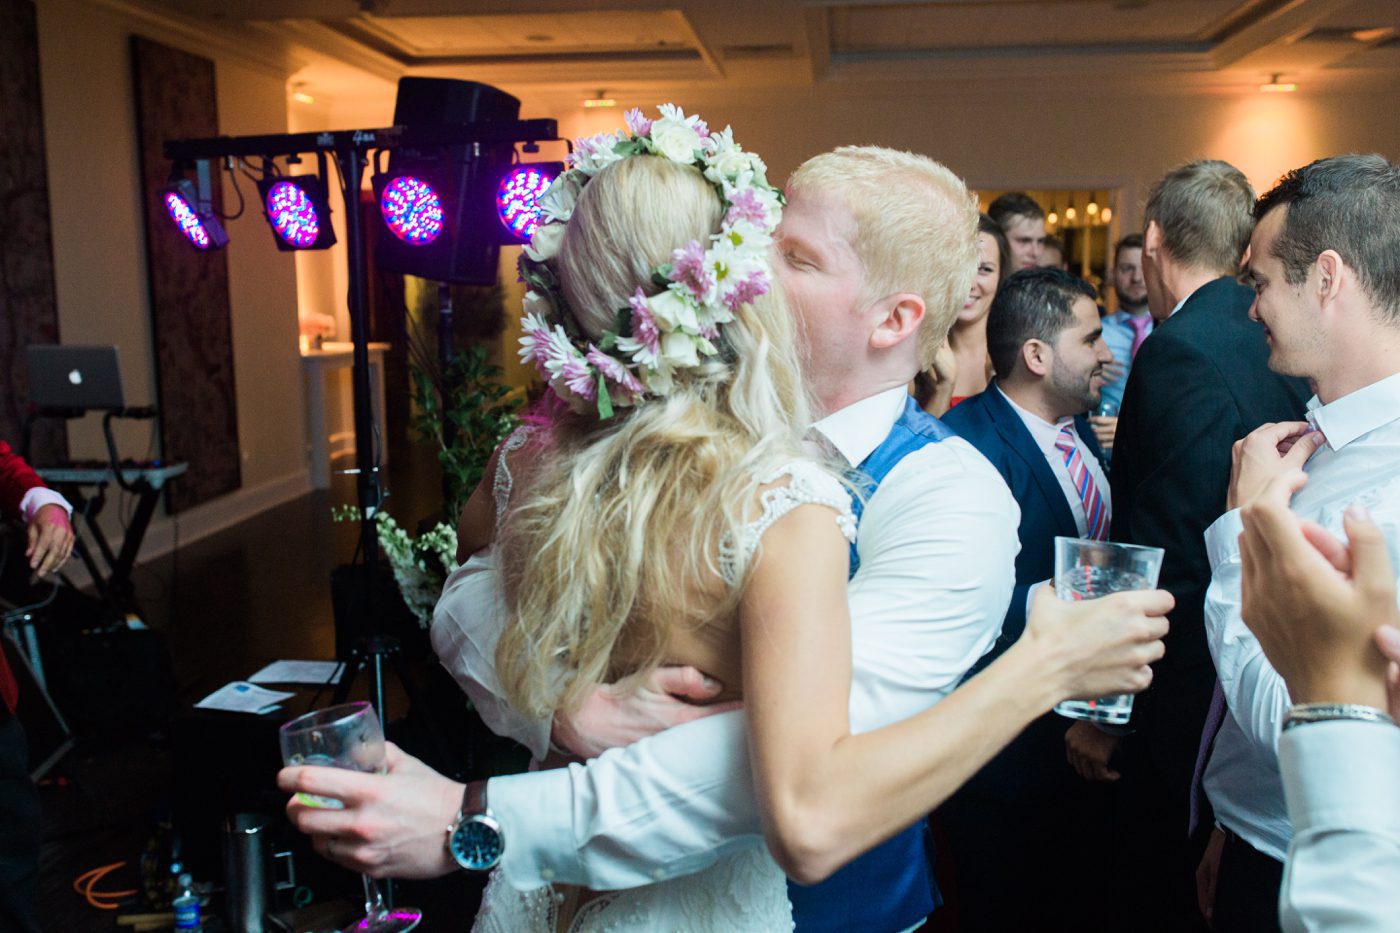 Intimate photo of groom kissing bride on dance floor